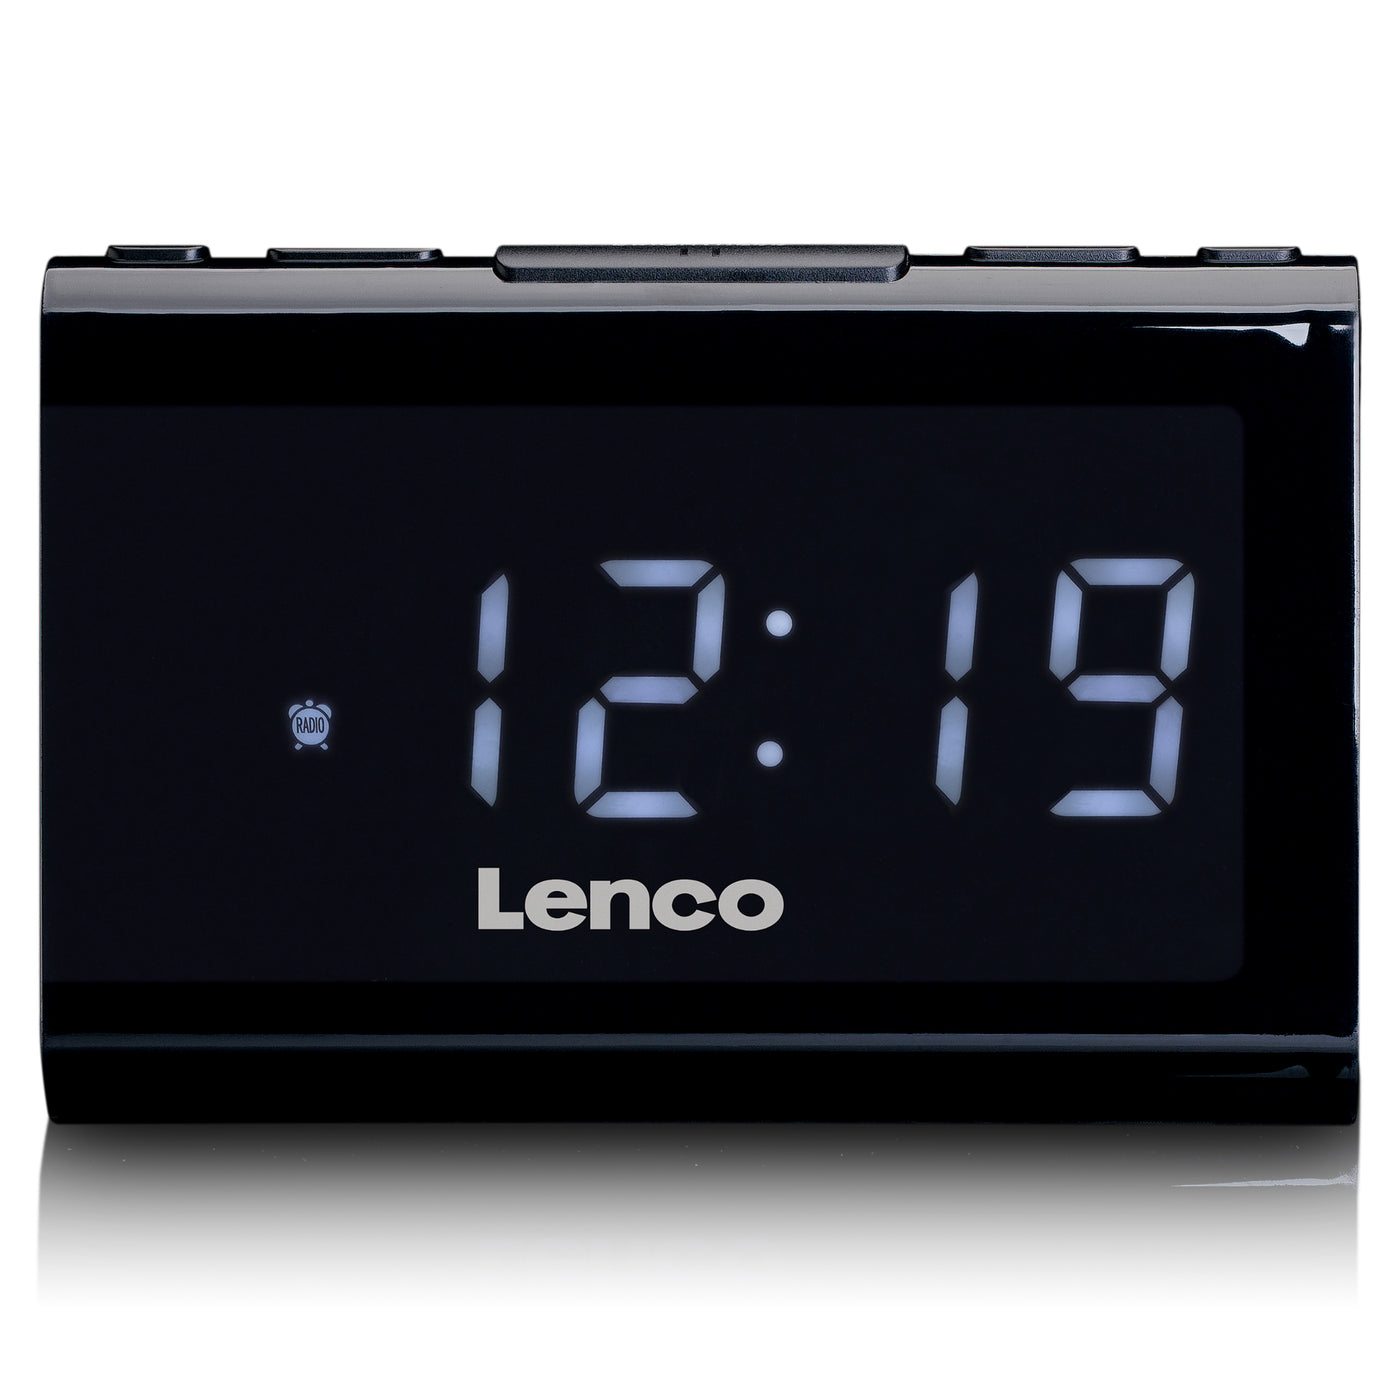 - USB with player CR-525 Lenco Clockradio